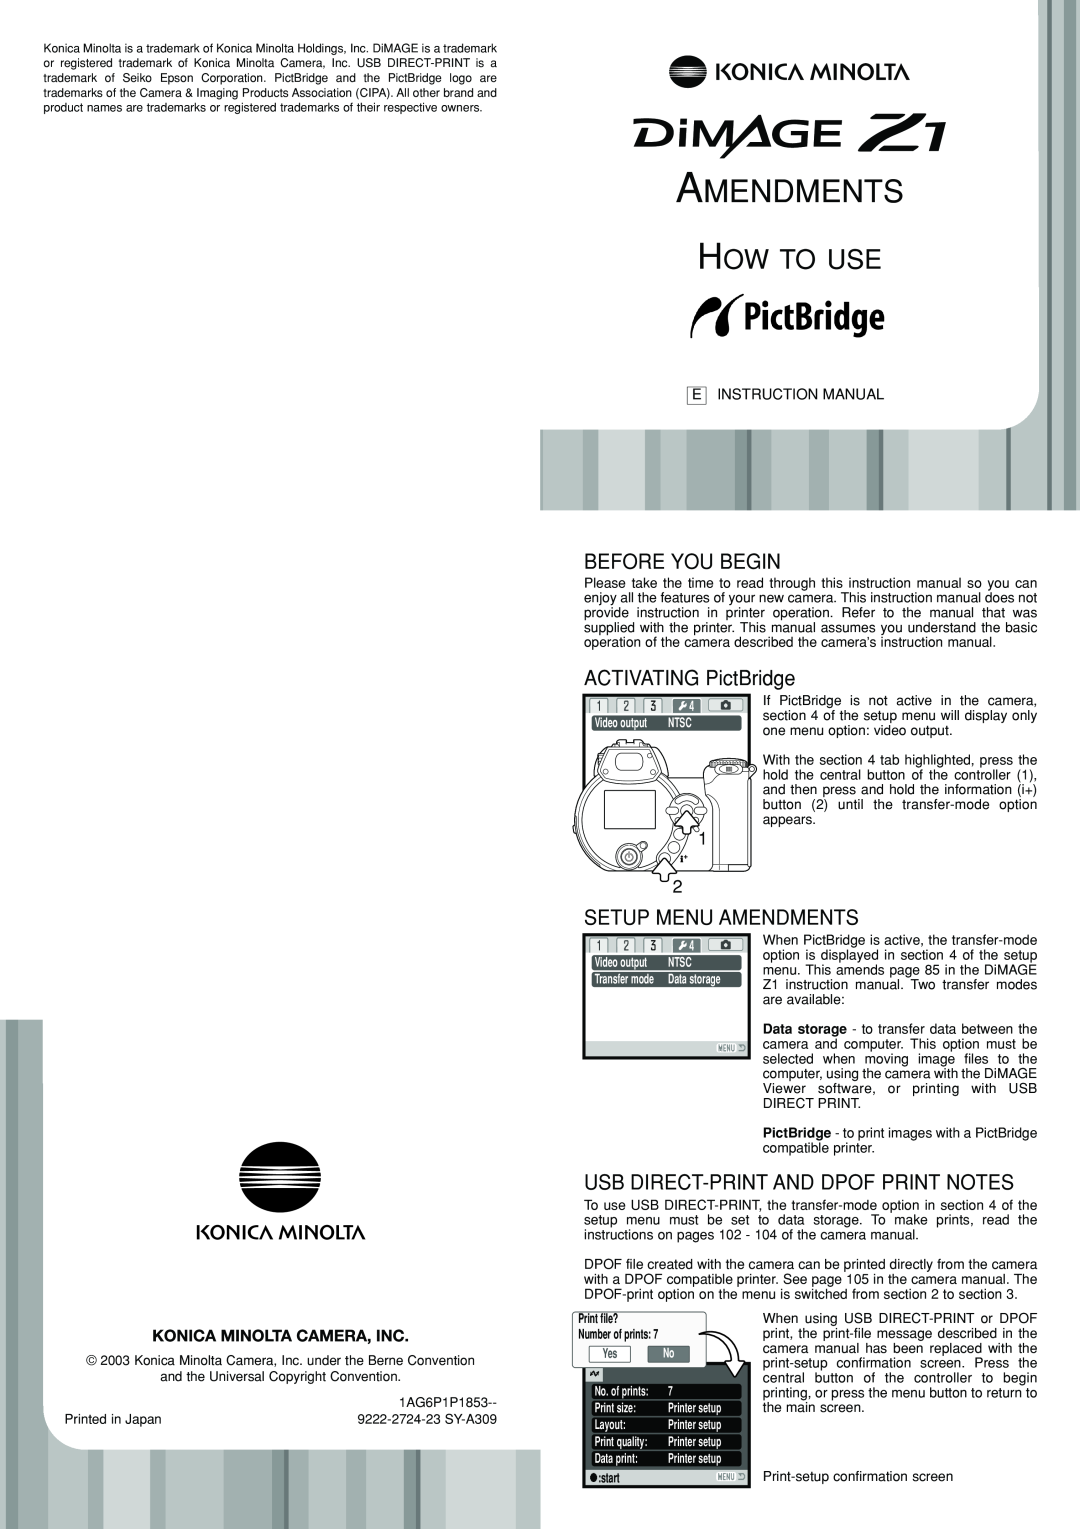 Konica Minolta Z1 instruction manual Before You Begin, ACTIVATING PictBridge, Setup Menu Amendments, How To Use 